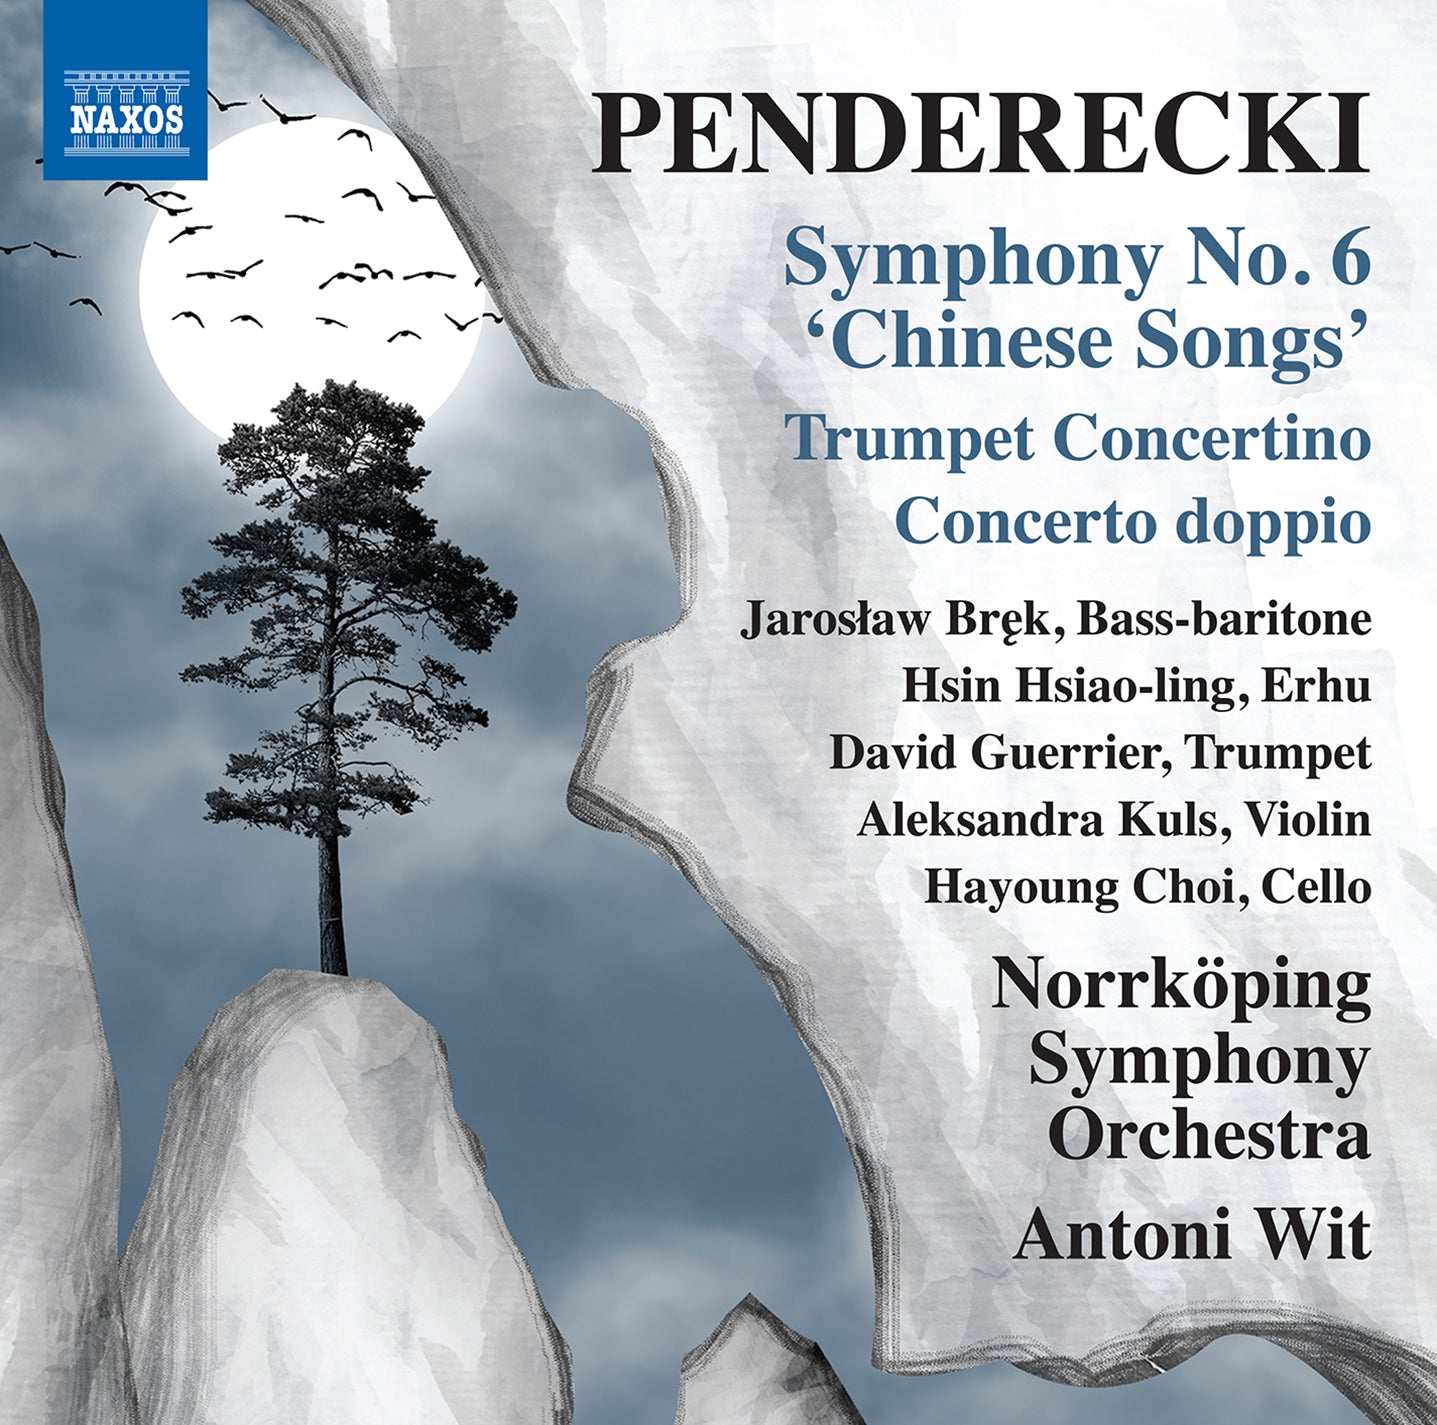 Penderecki: Symphony No. 6 "Chinese Songs" / Wit, Norrköping Symphony